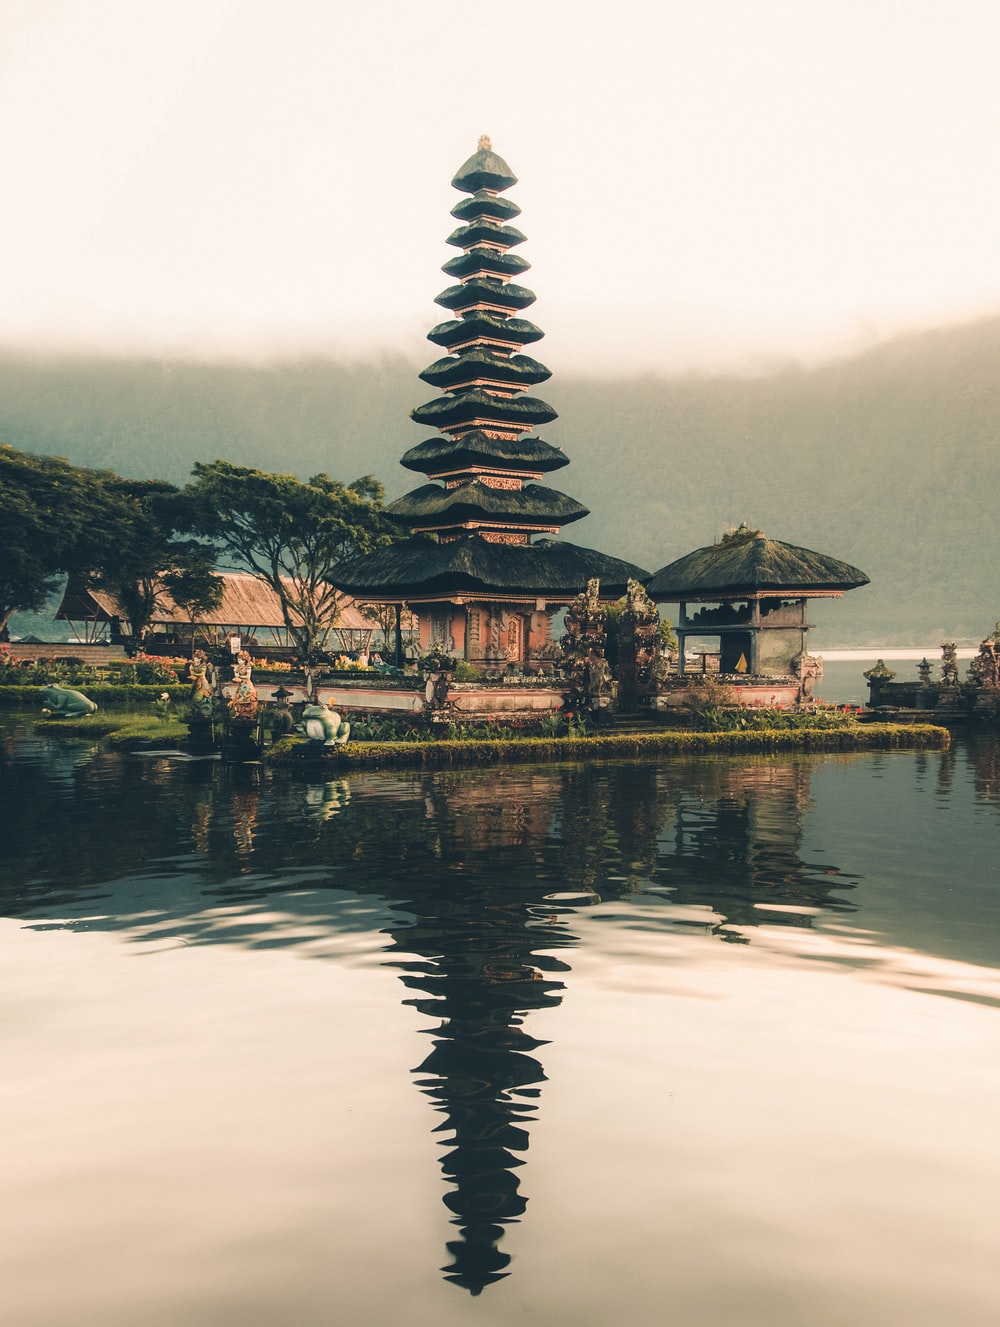 Beautiful Bali Image. Download Free Picture